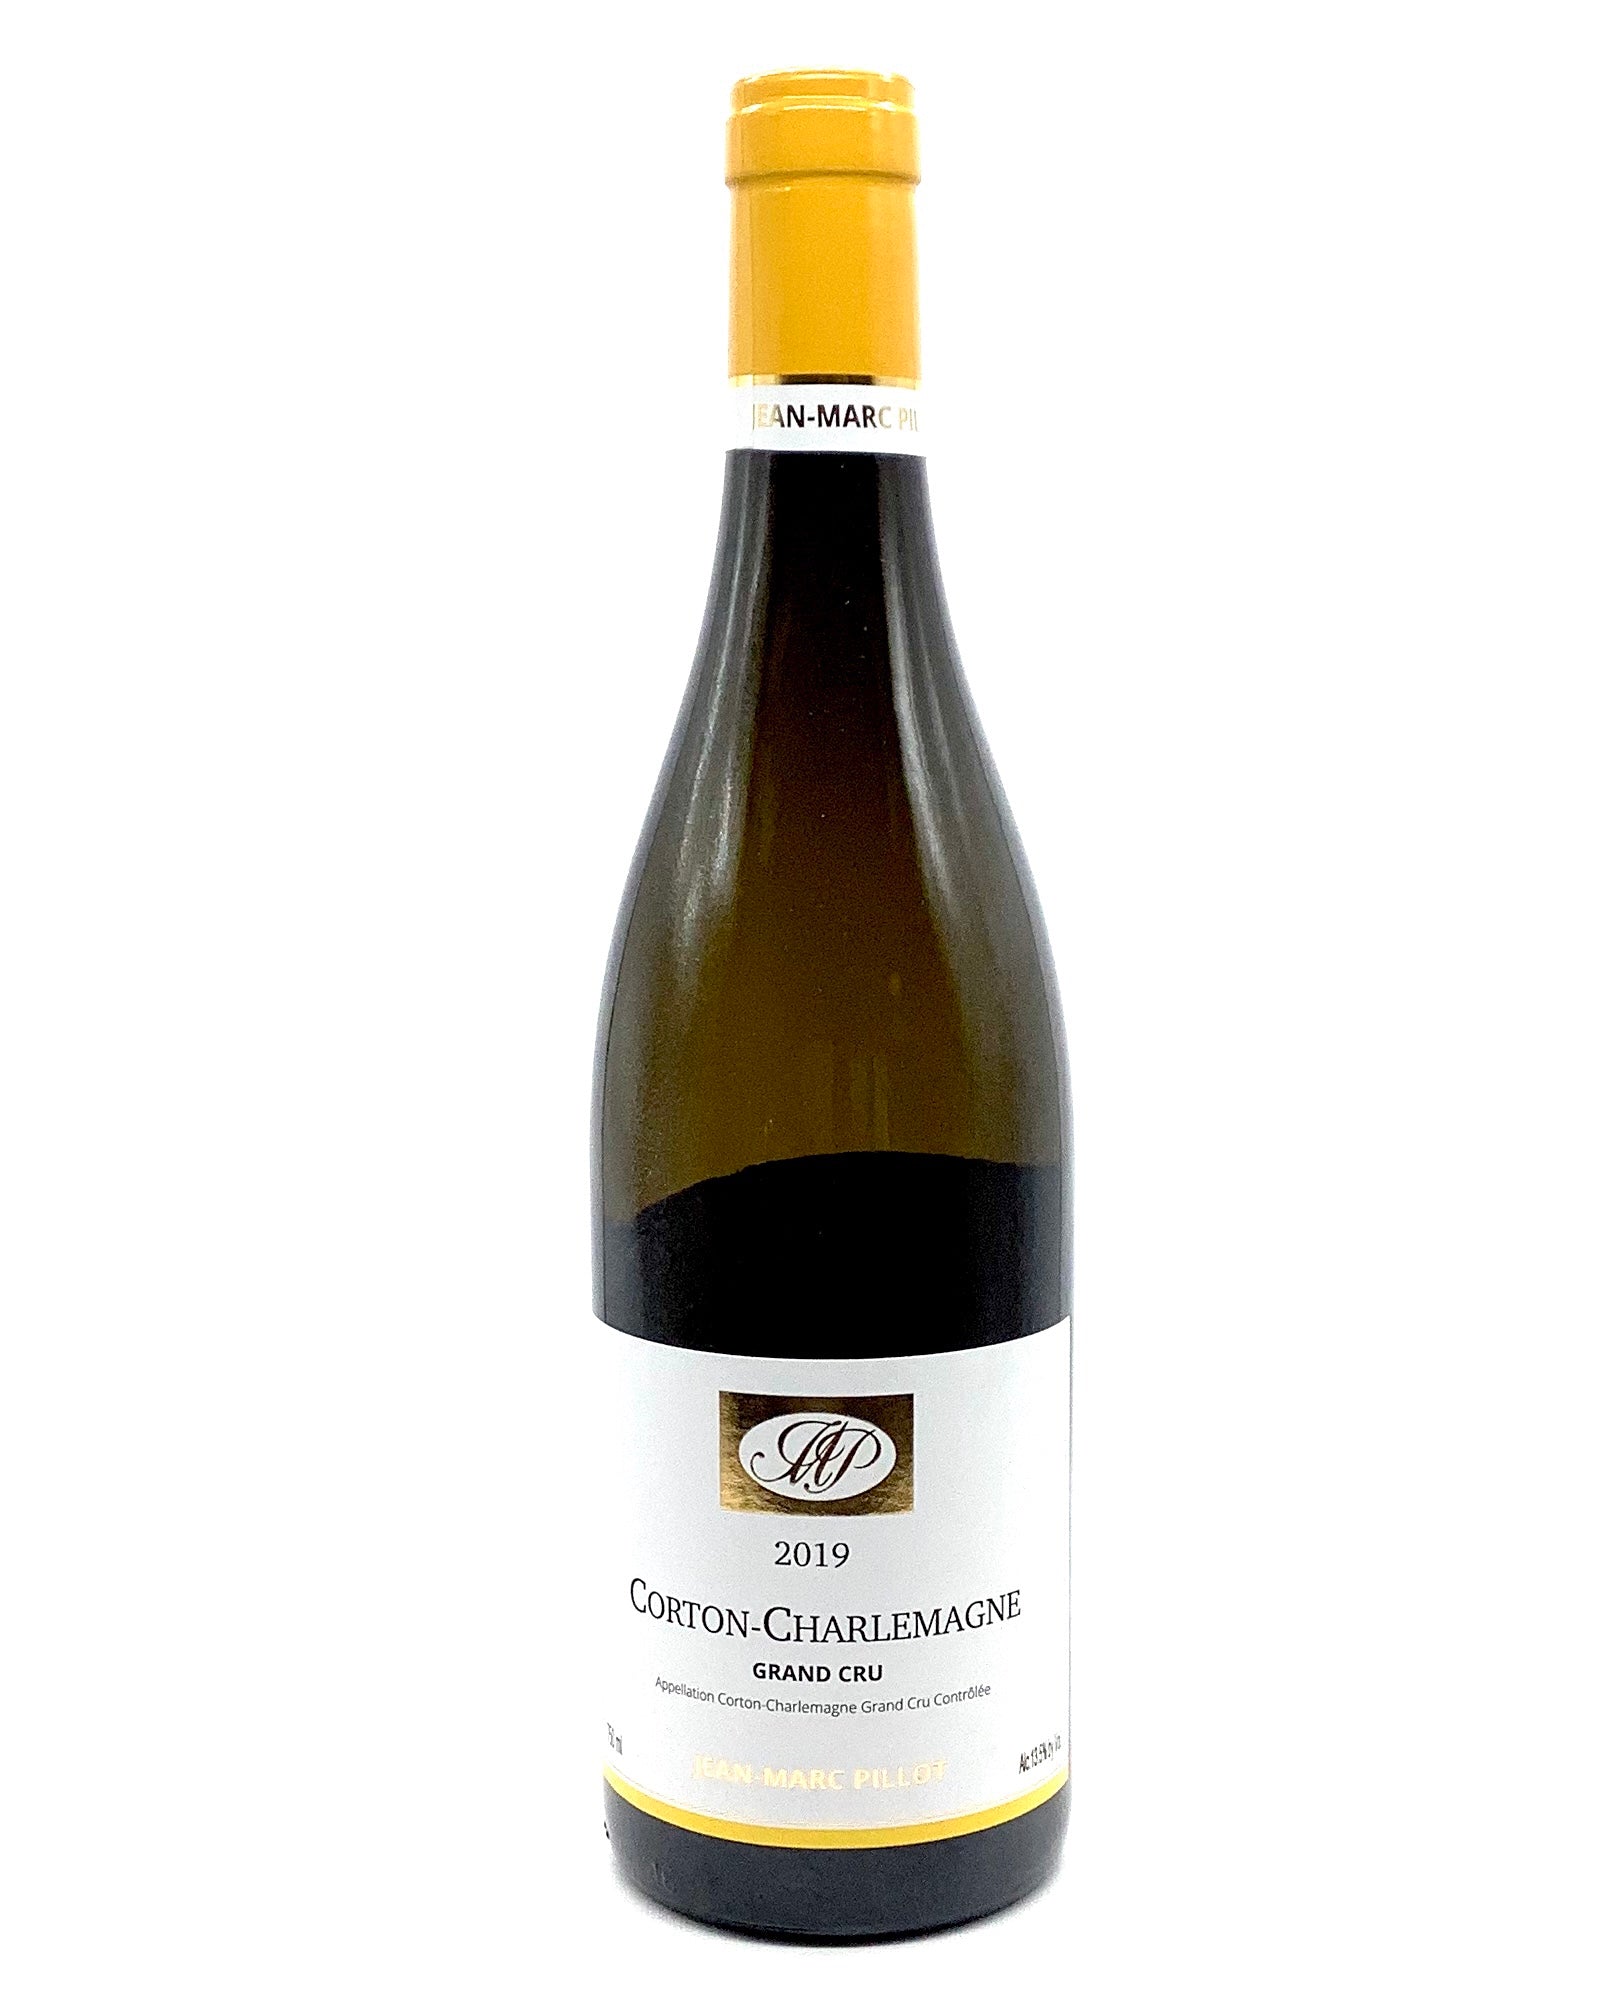 Jean-Marc Pillot, Chardonnay, Corton-Charlemagne Grand Cru, Côte de Beaune, France 2019